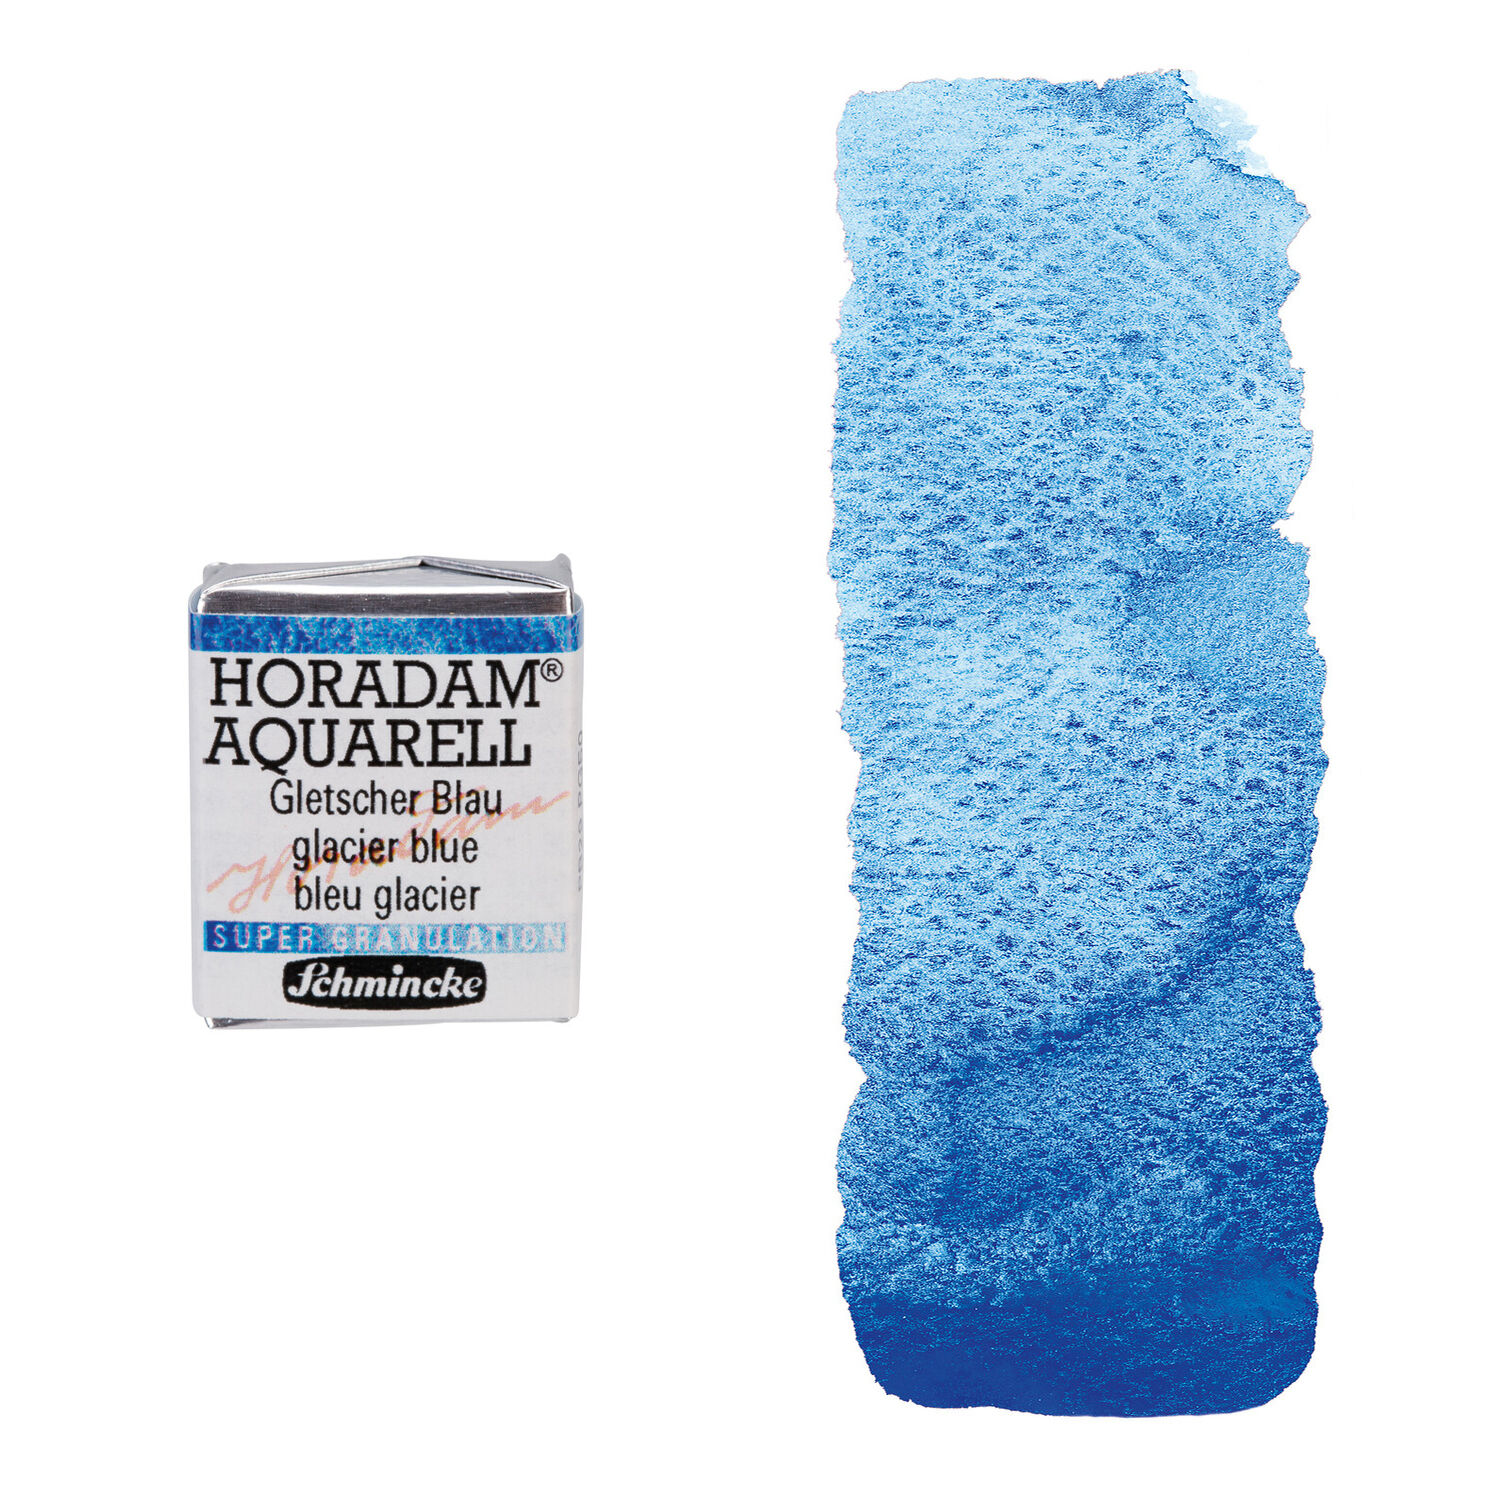 NEU Horadam Aquarell Super Granulation, 1/2 Näpfchen, Gletscher Blau